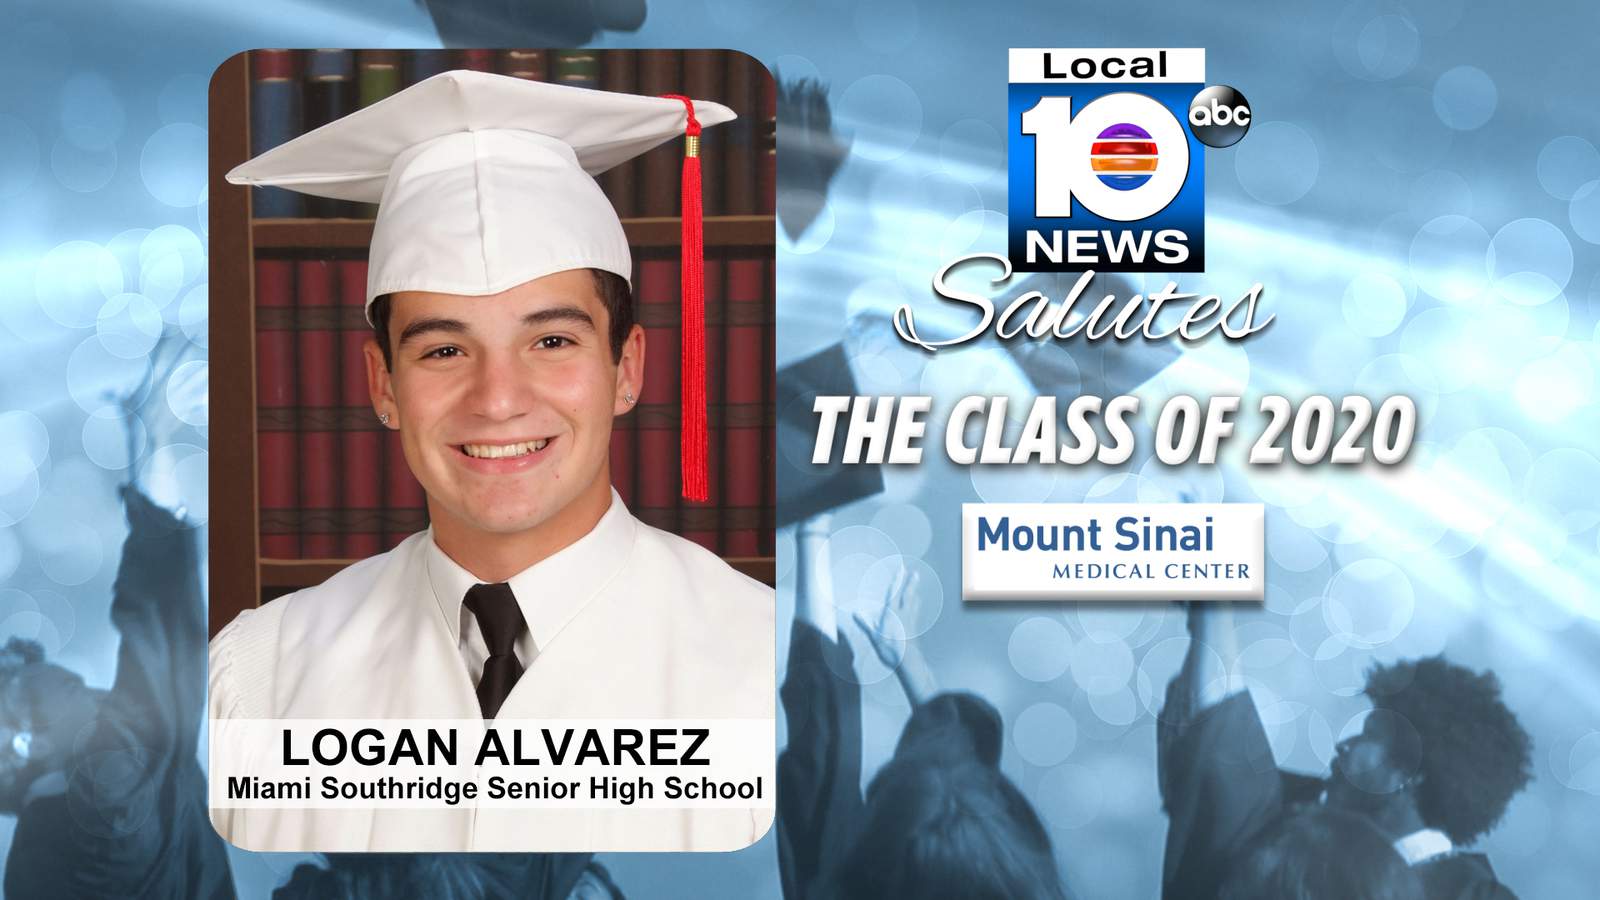 Positivity prevails for Class of 2020 graduates like Logan Alvarez